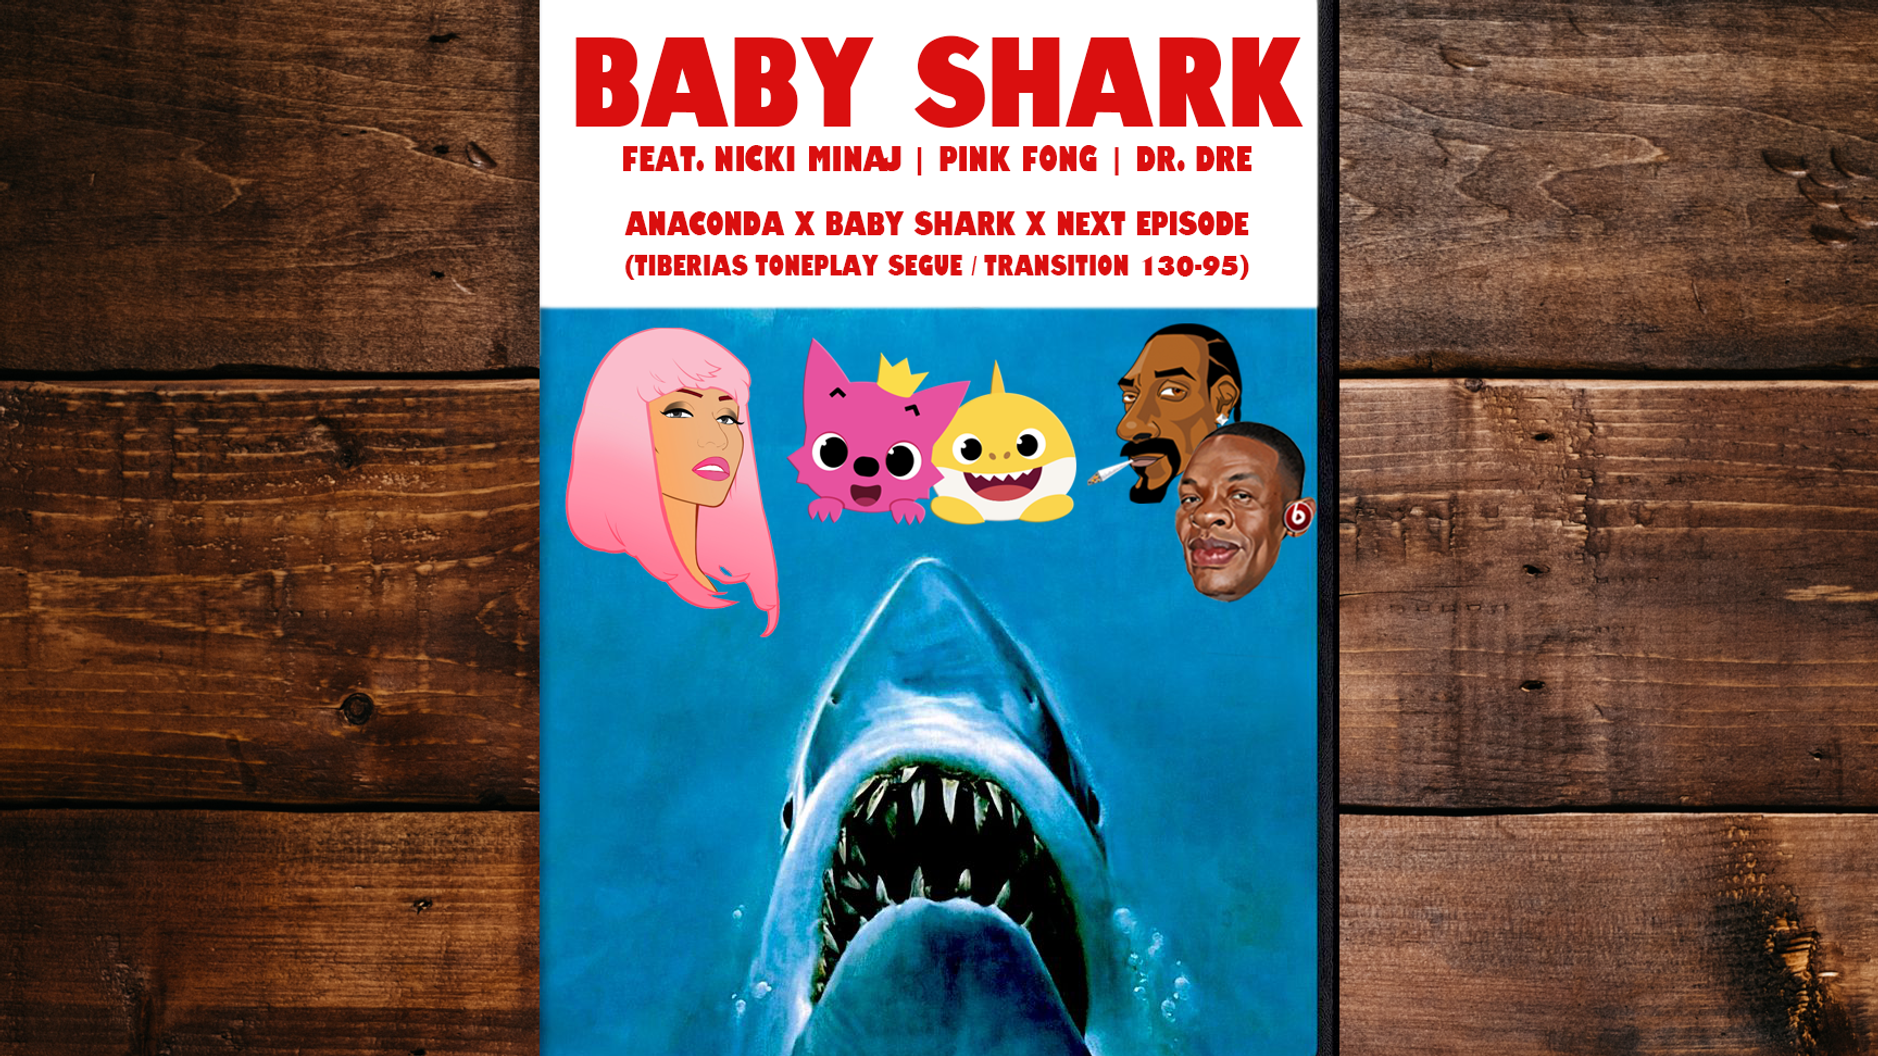 Anaconda x Baby Shark x Next Episode (Dirty)